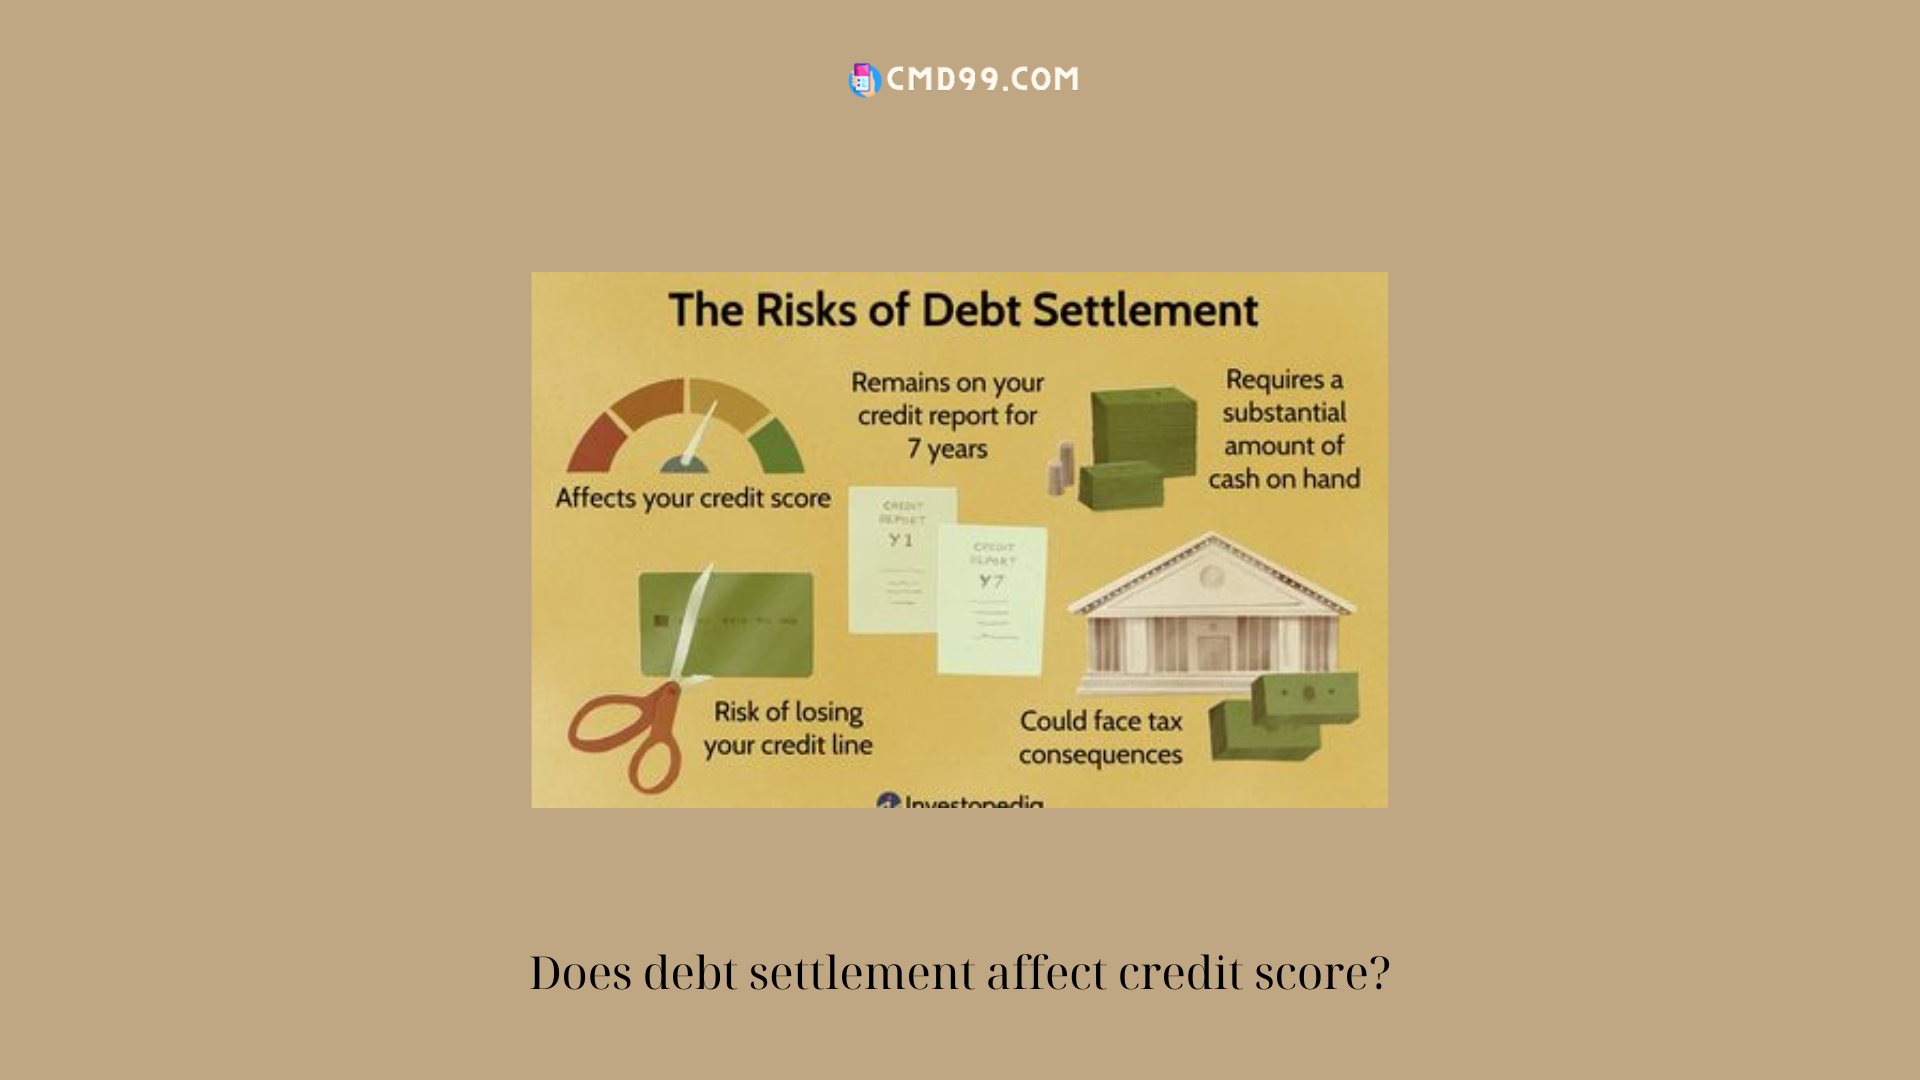 Does debt settlement affect credit score?